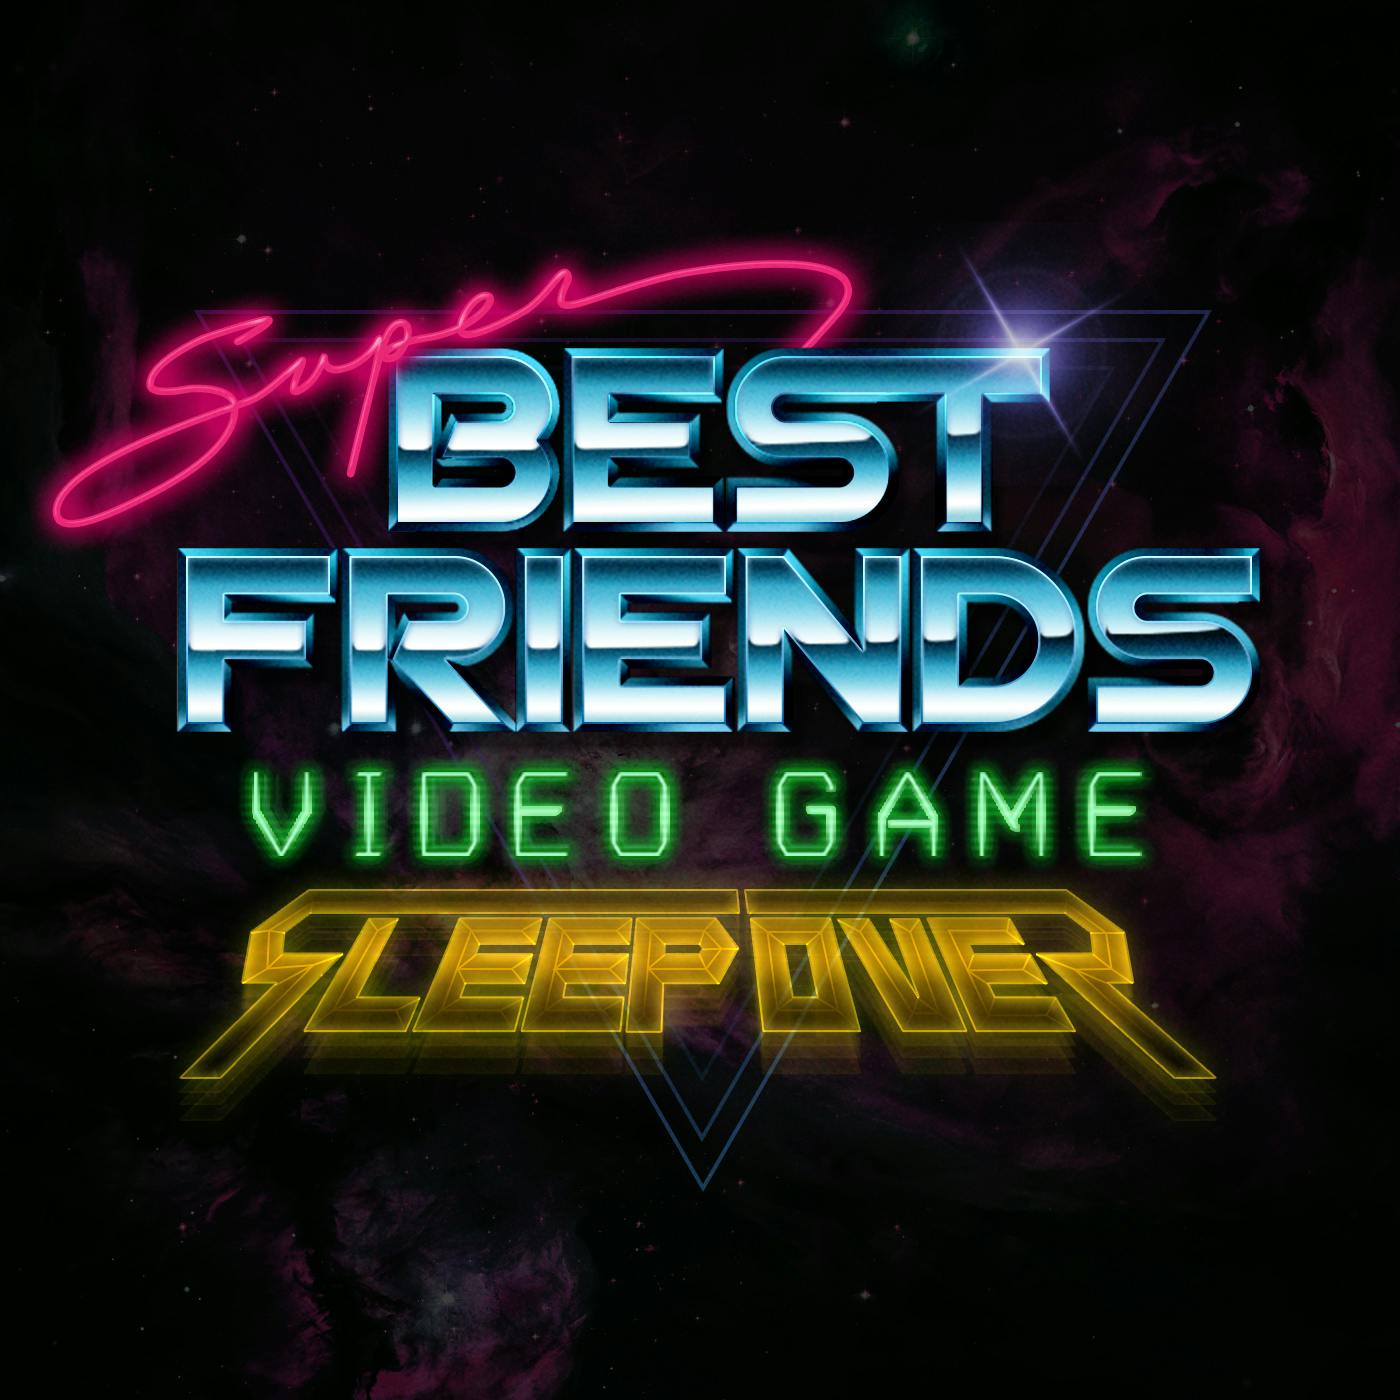 Super Best Friends Video Game Sleepover - Episode 50